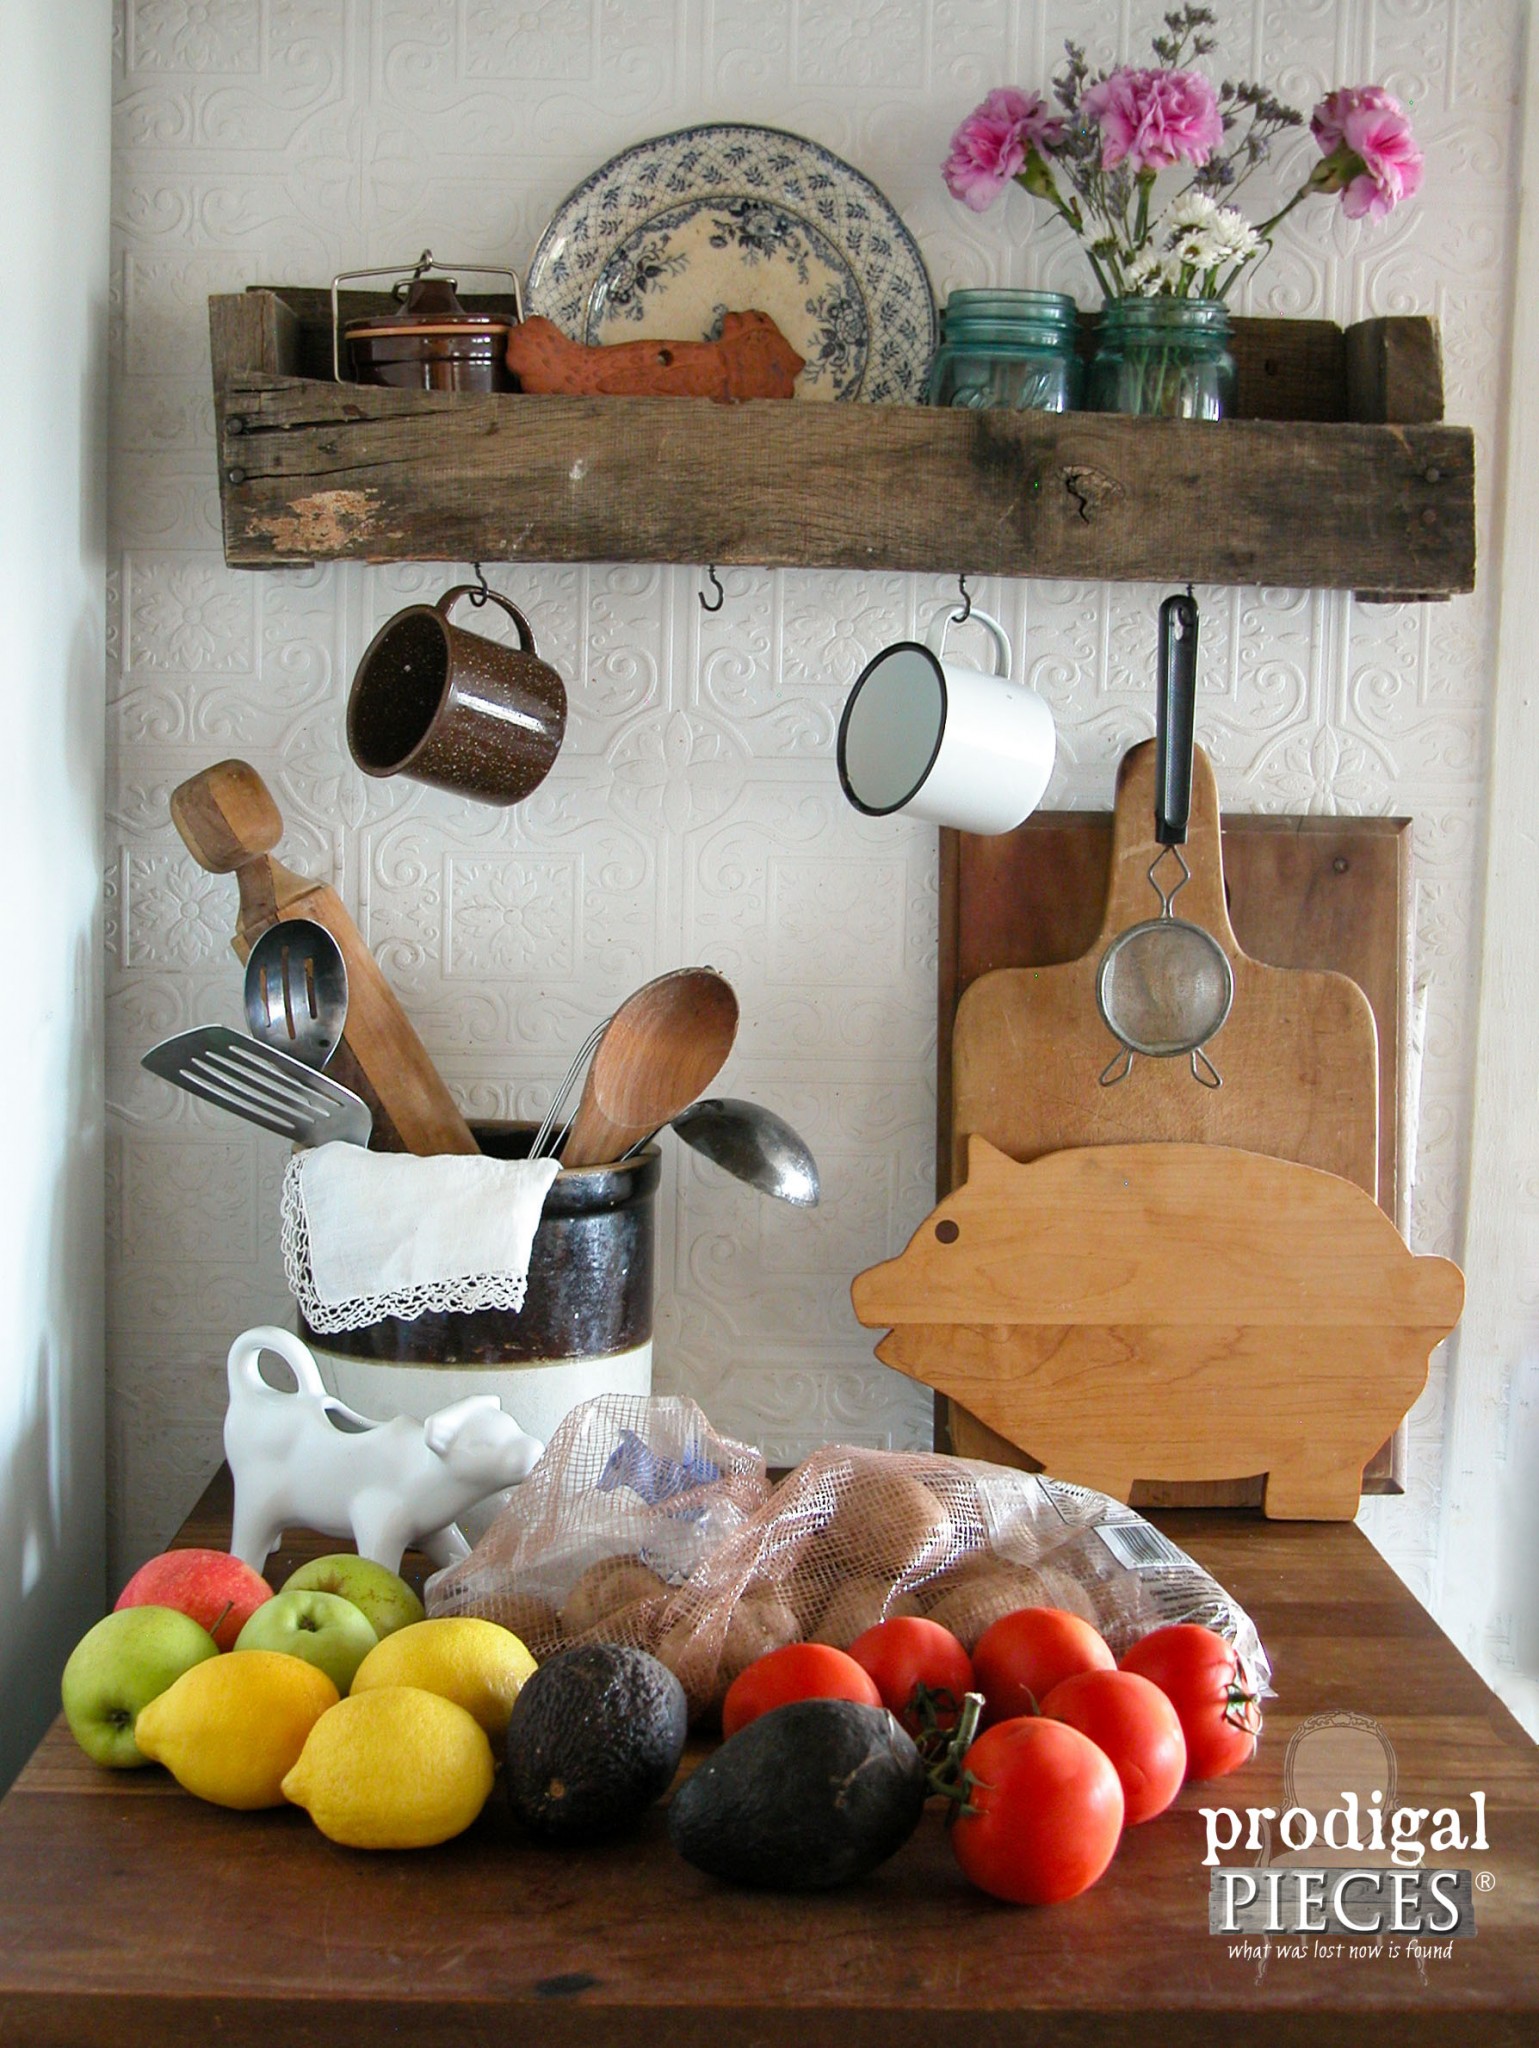 Kitchen Counter Clutter Before Storage Bin | Prodigal Pieces | www.prodigalpieces.com